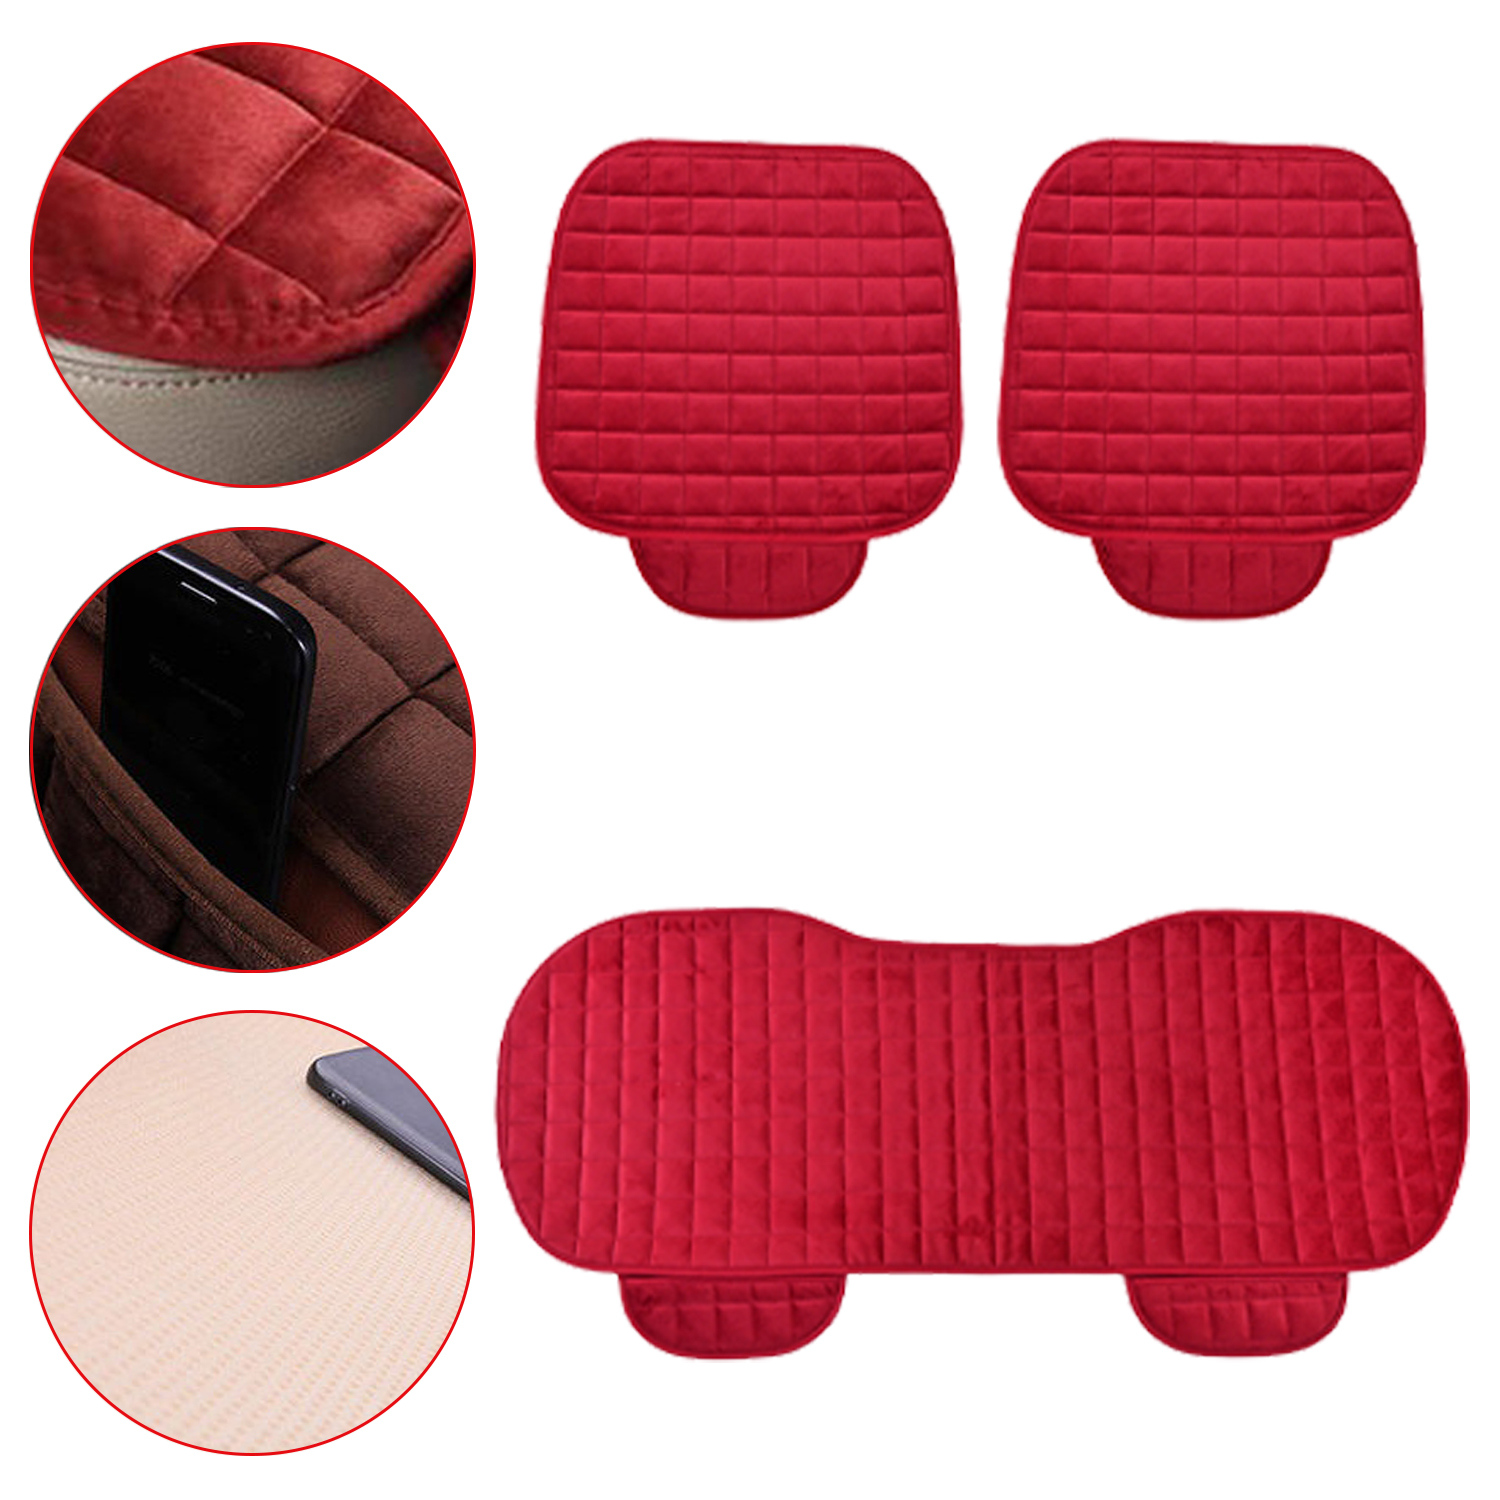 Wholesale 3Pcs Car Seat Cover Winter Plush Warm Anti-Slip Car Seat Cushion Cover Set with Storage Pocket